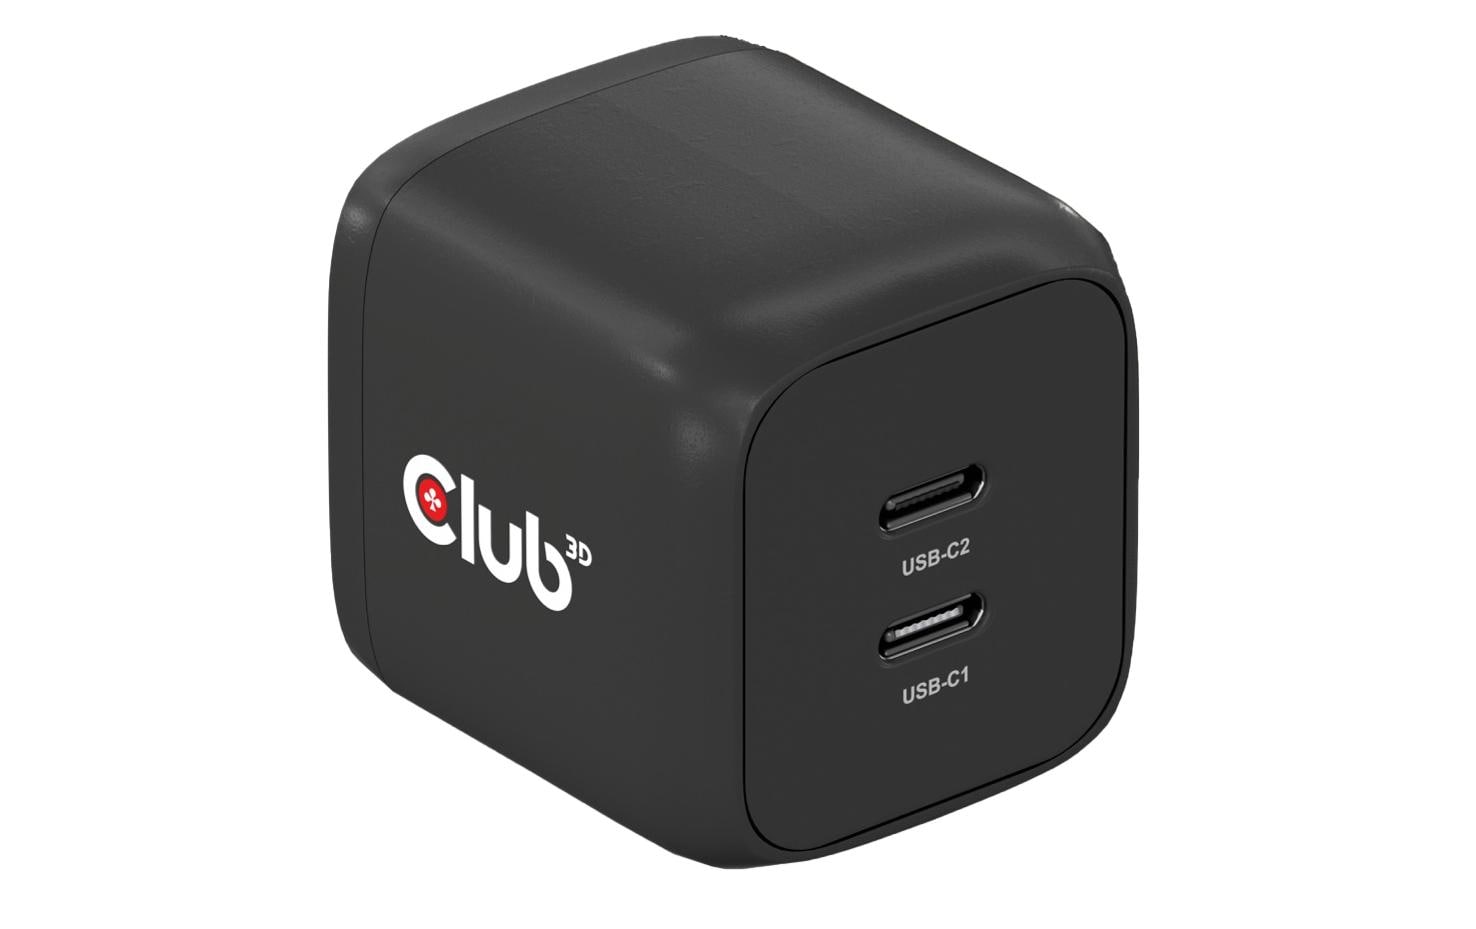 Club 3D USB-Wandladegerät CAC-1909